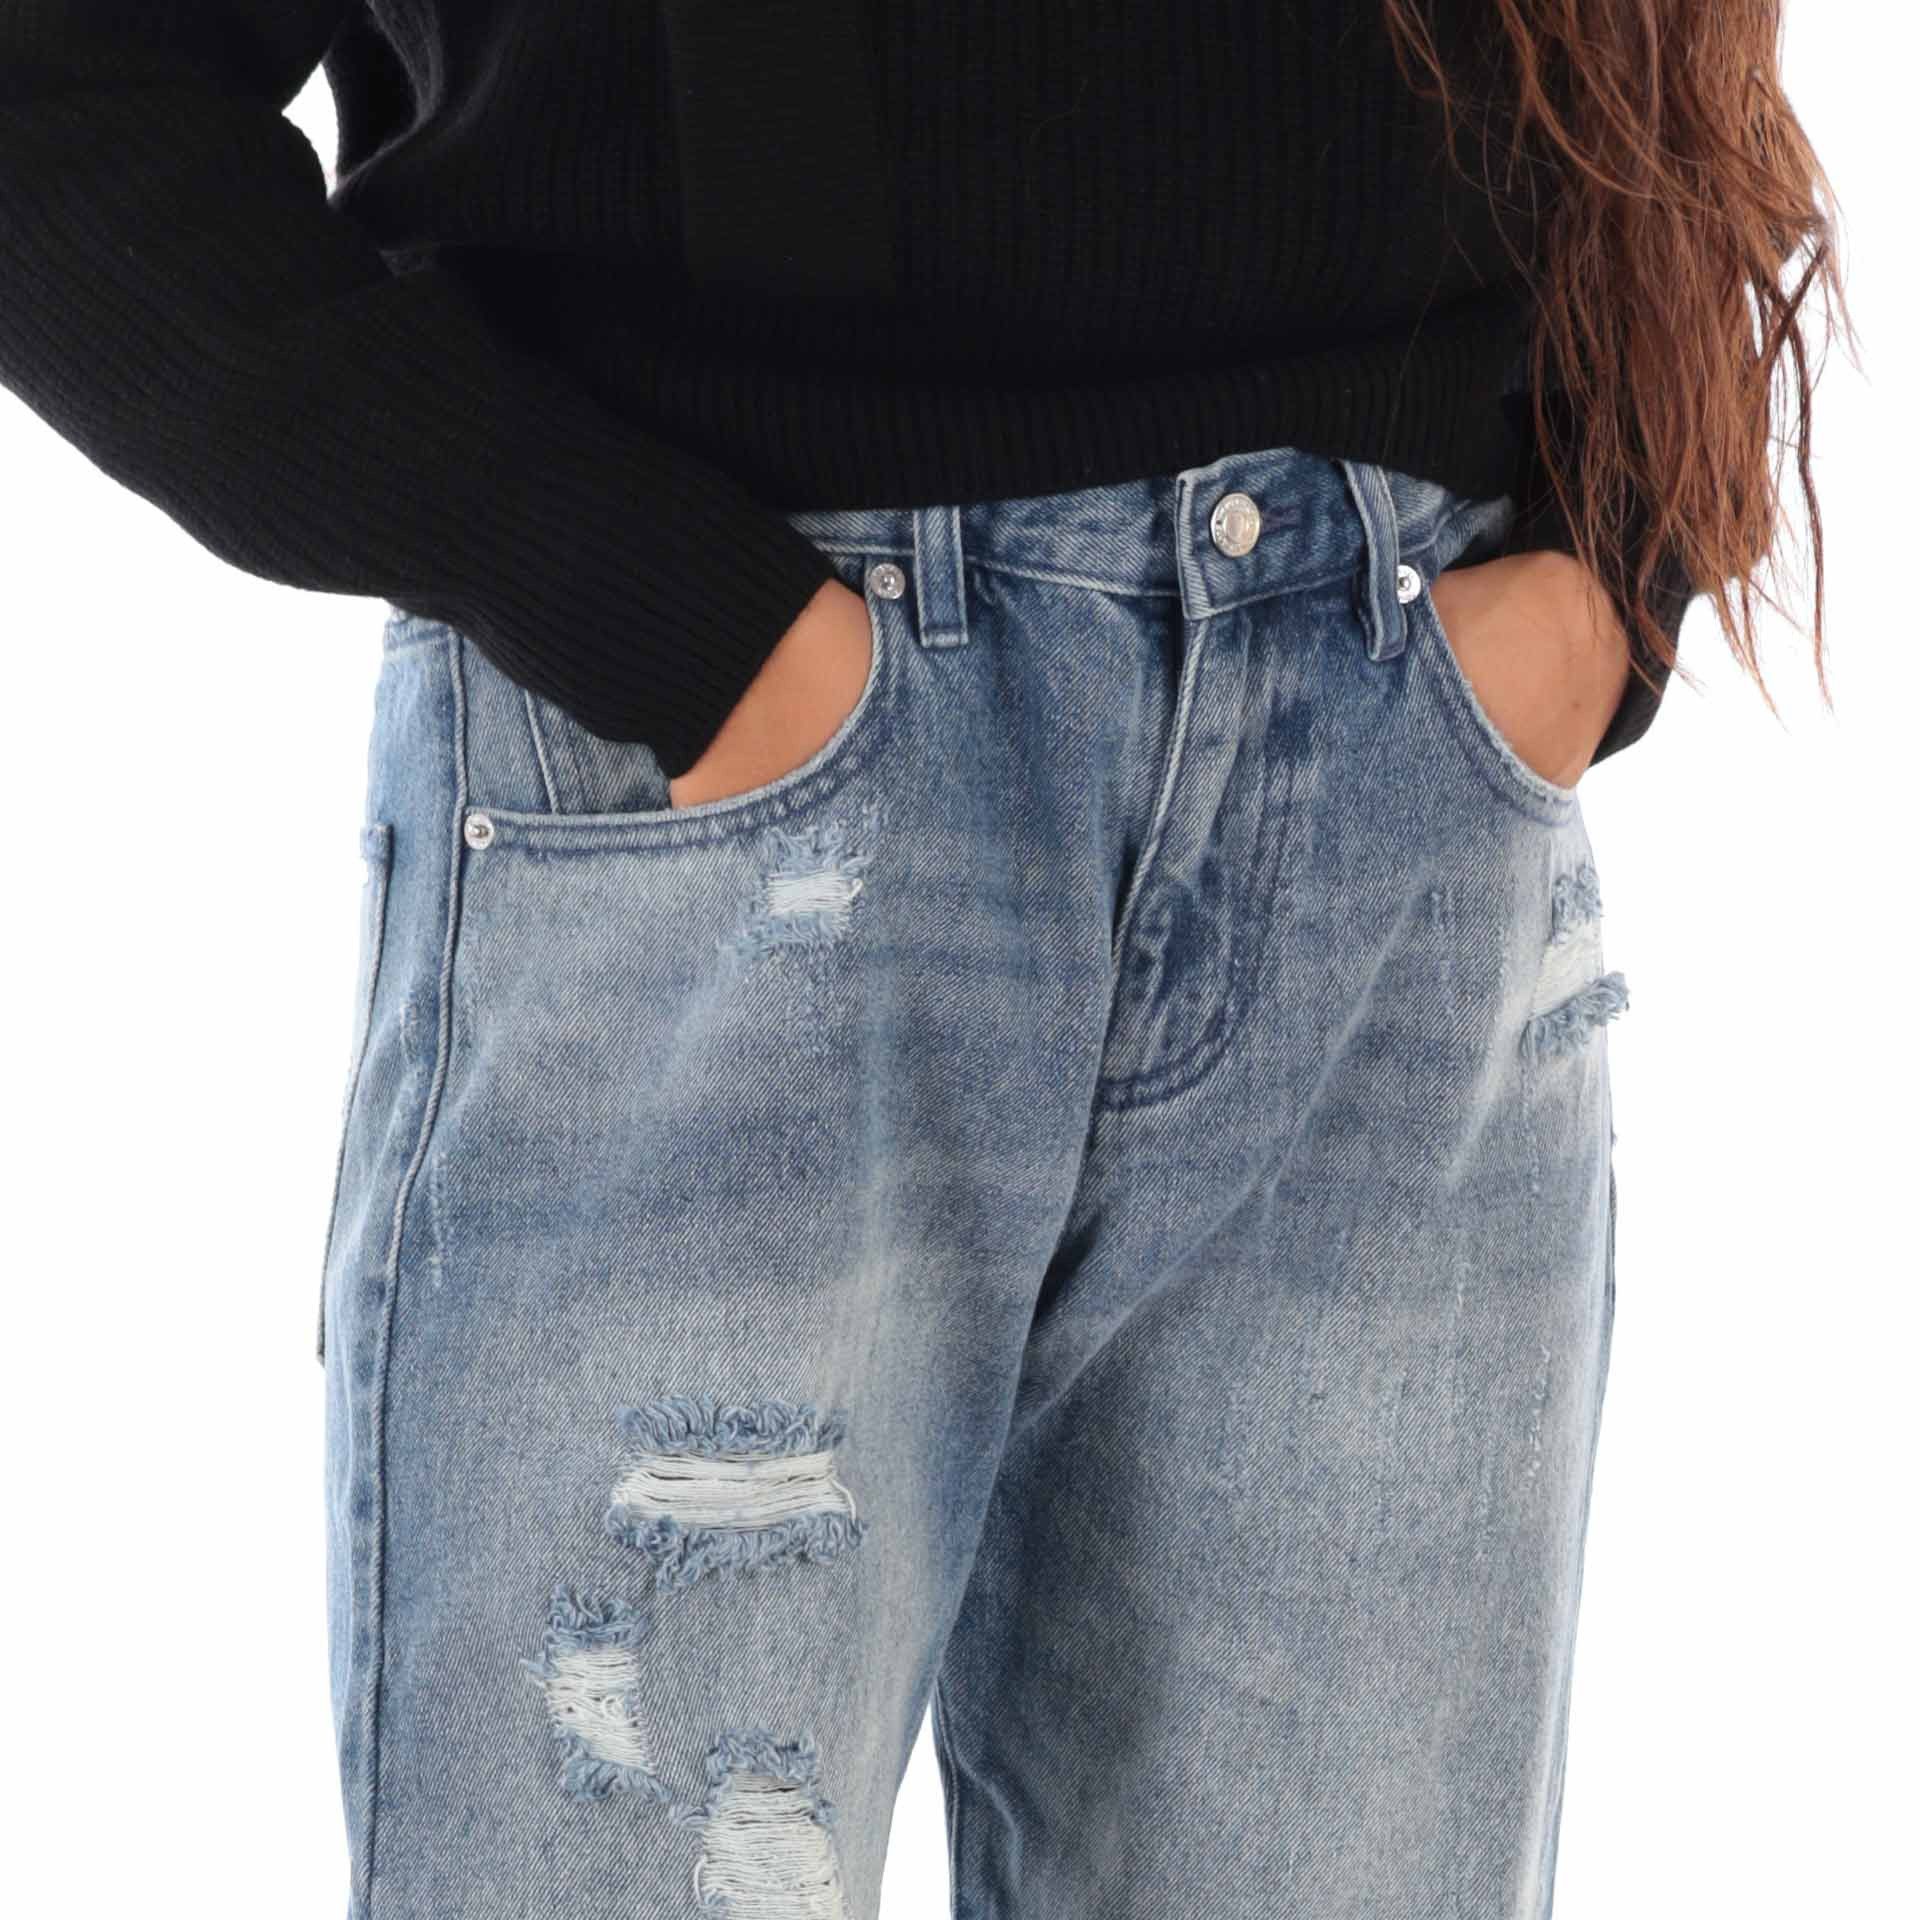 Michael kors jeans 5 tasche effetto consumato da donna